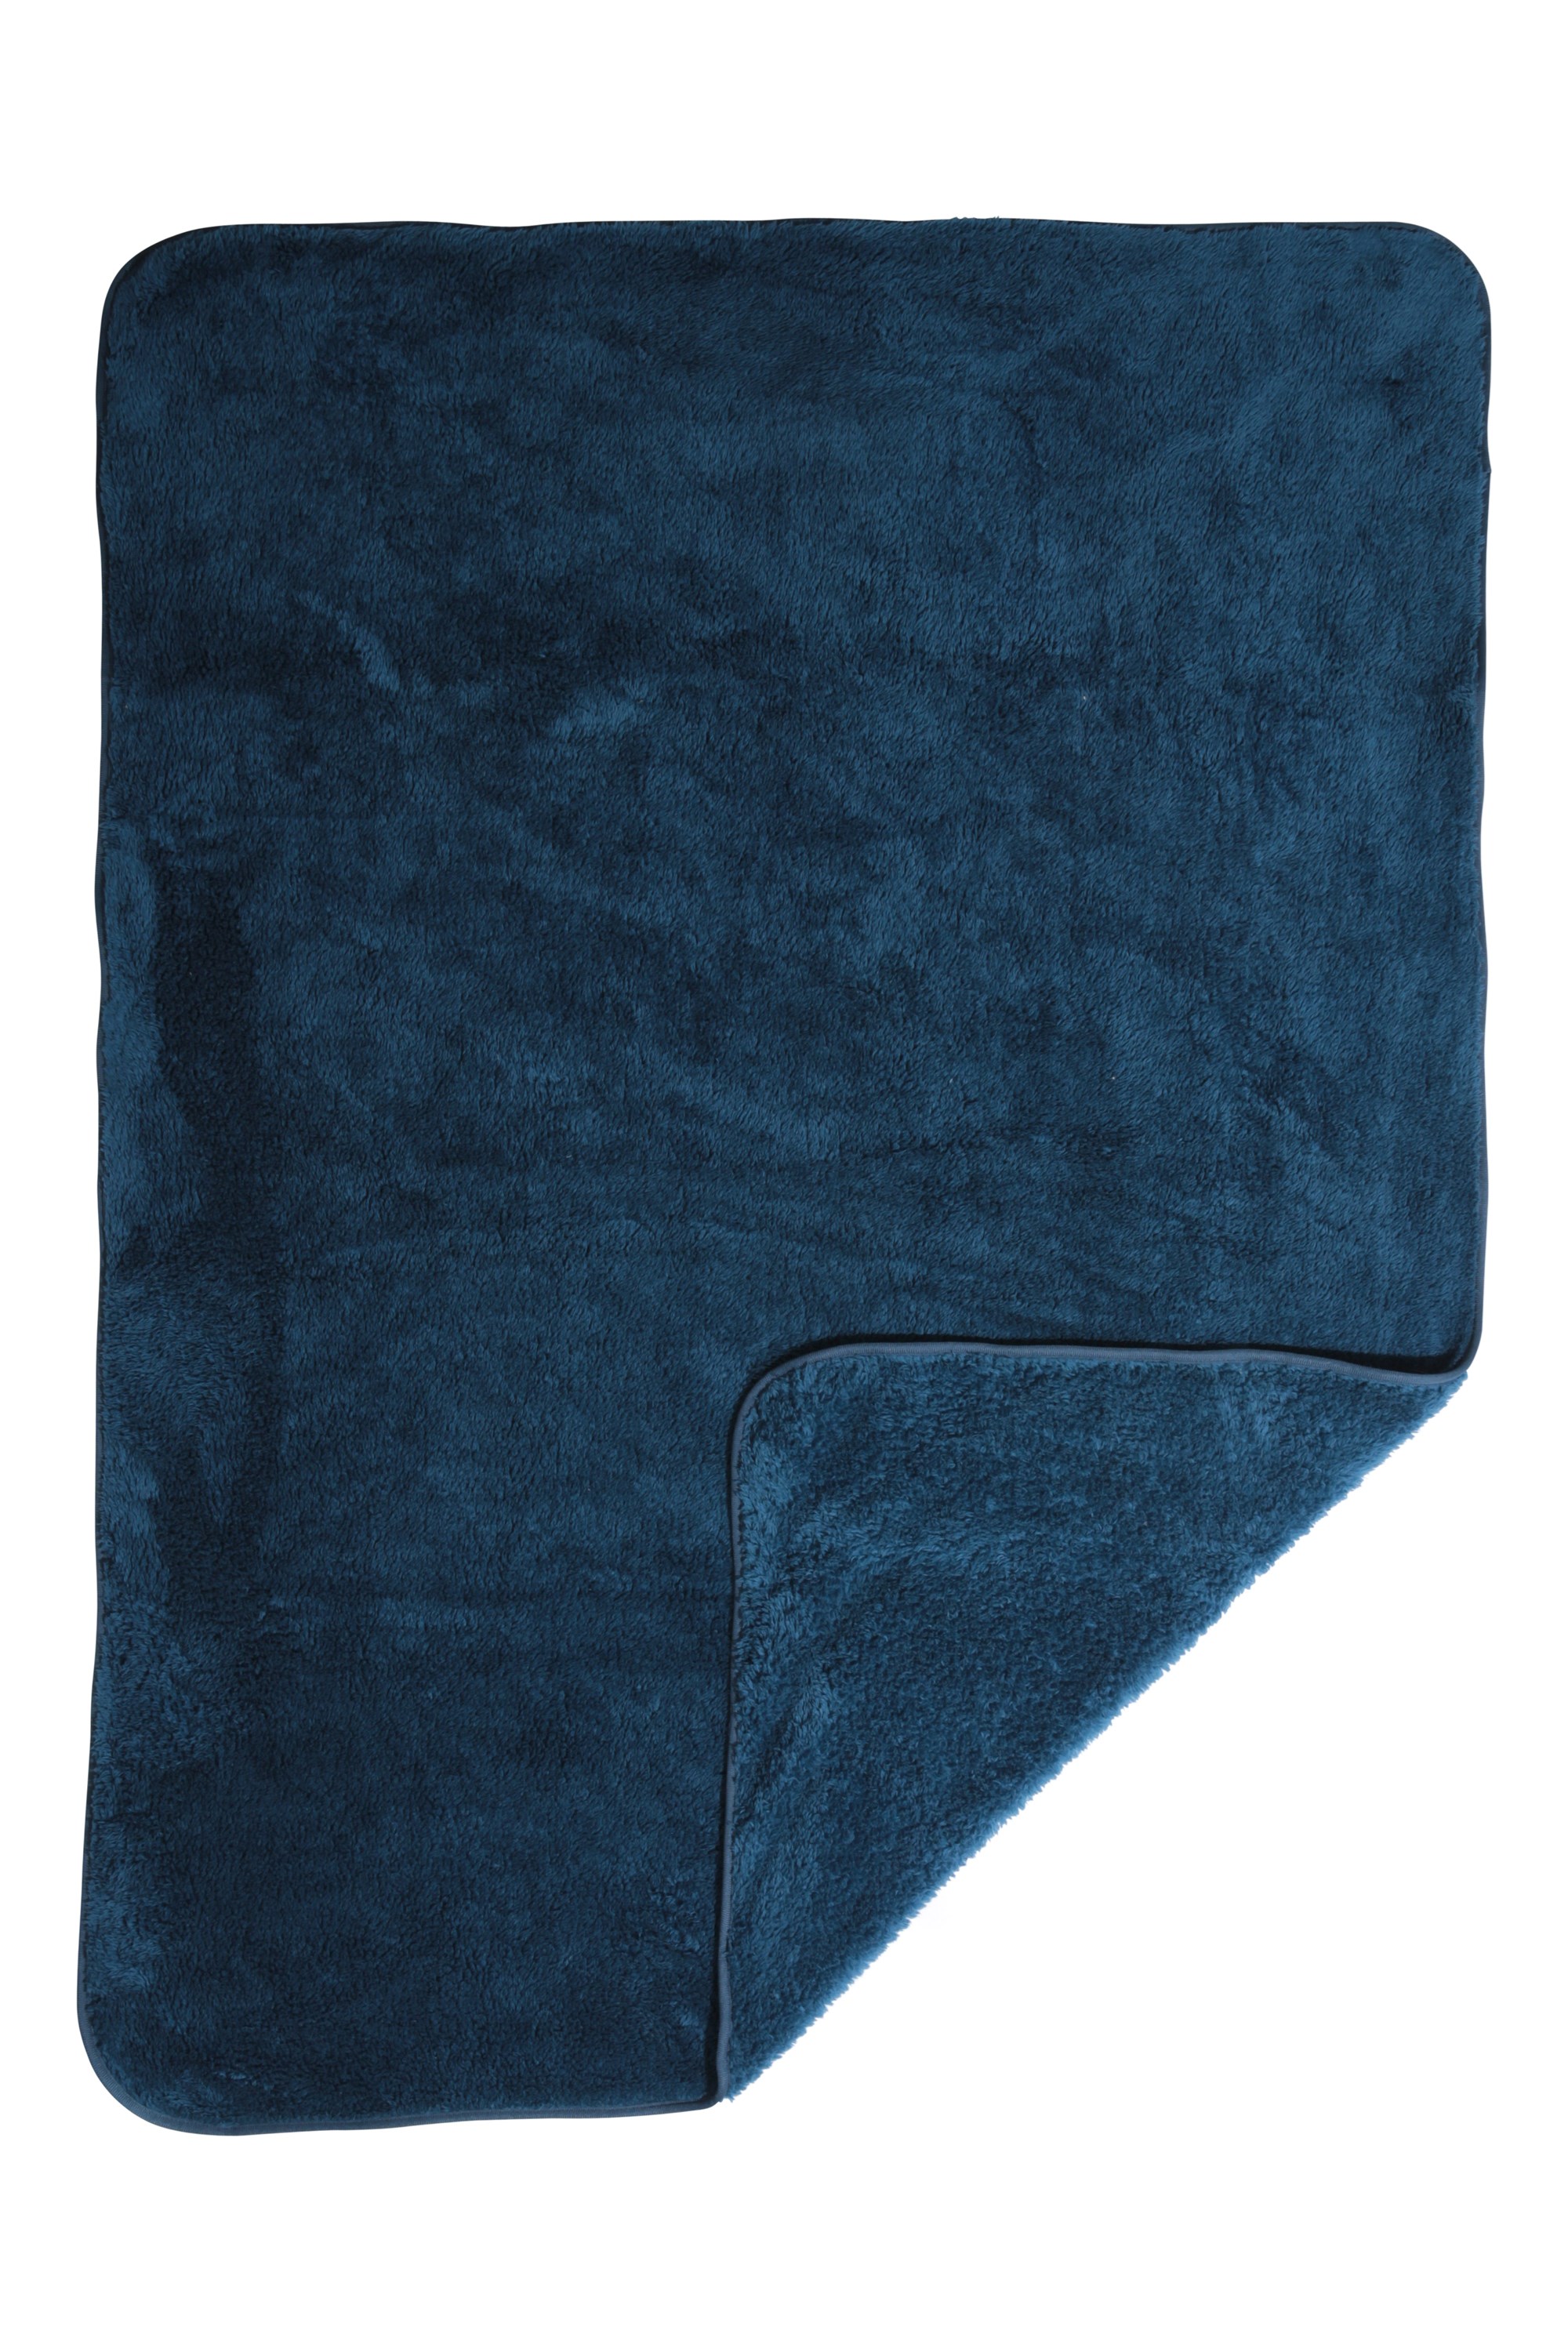 Supersoft Fleece Blanket - Teal